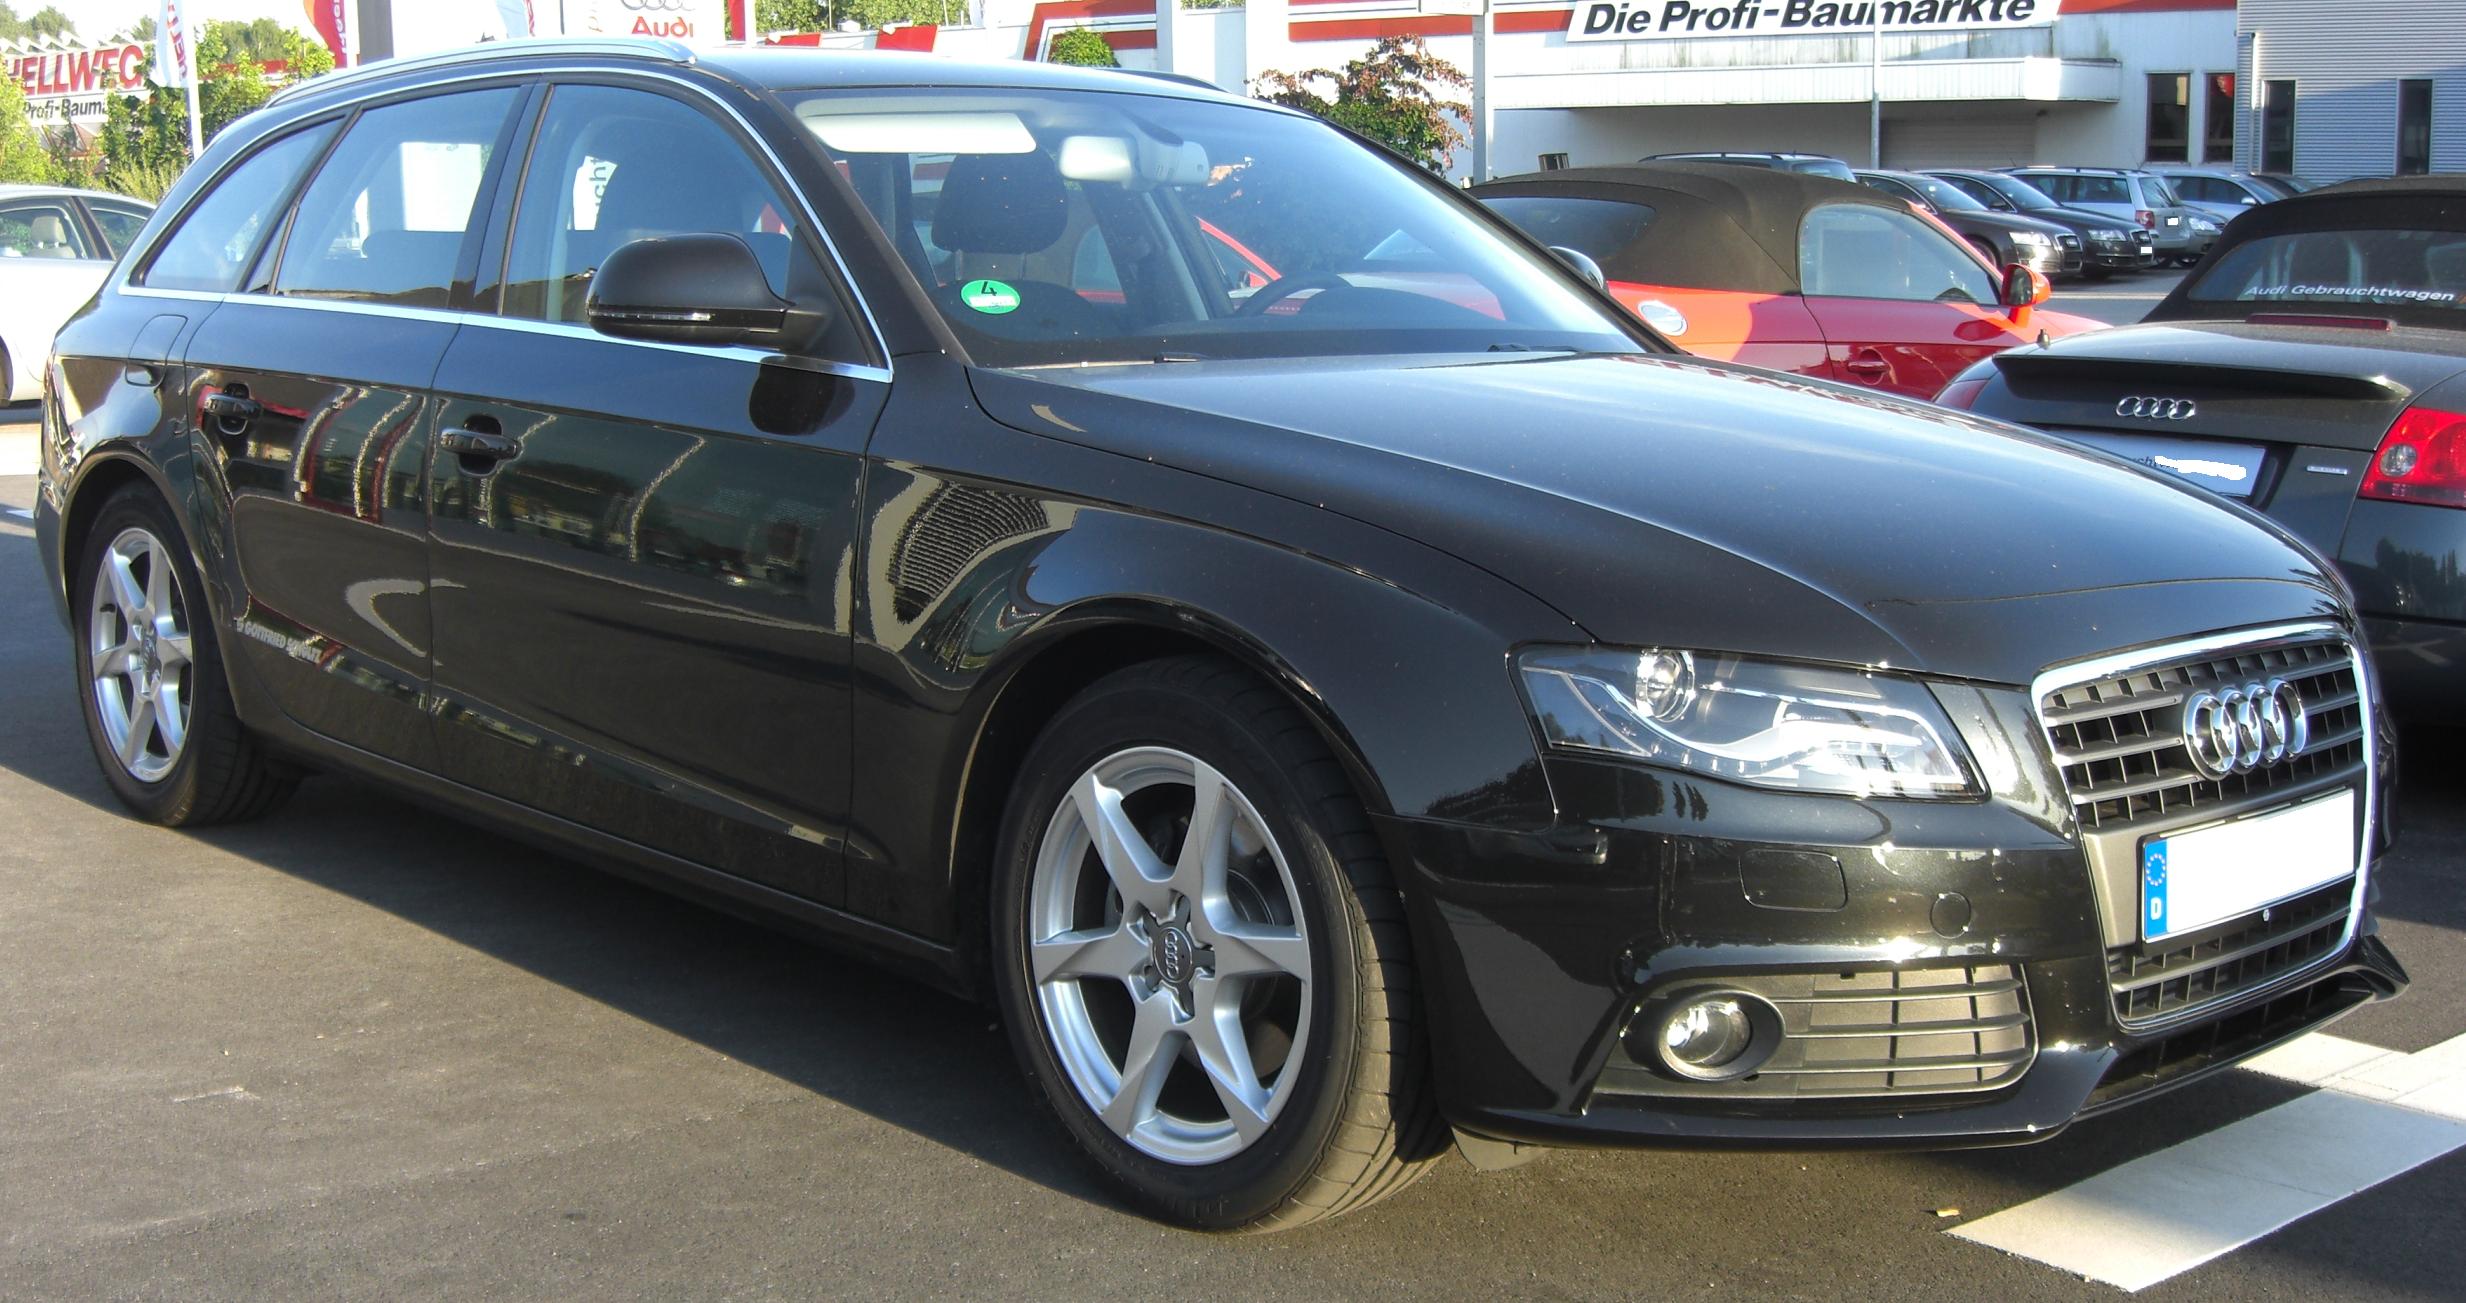 File:Audi A4 B8 Avant front 20100715.jpg - Wikimedia Commons